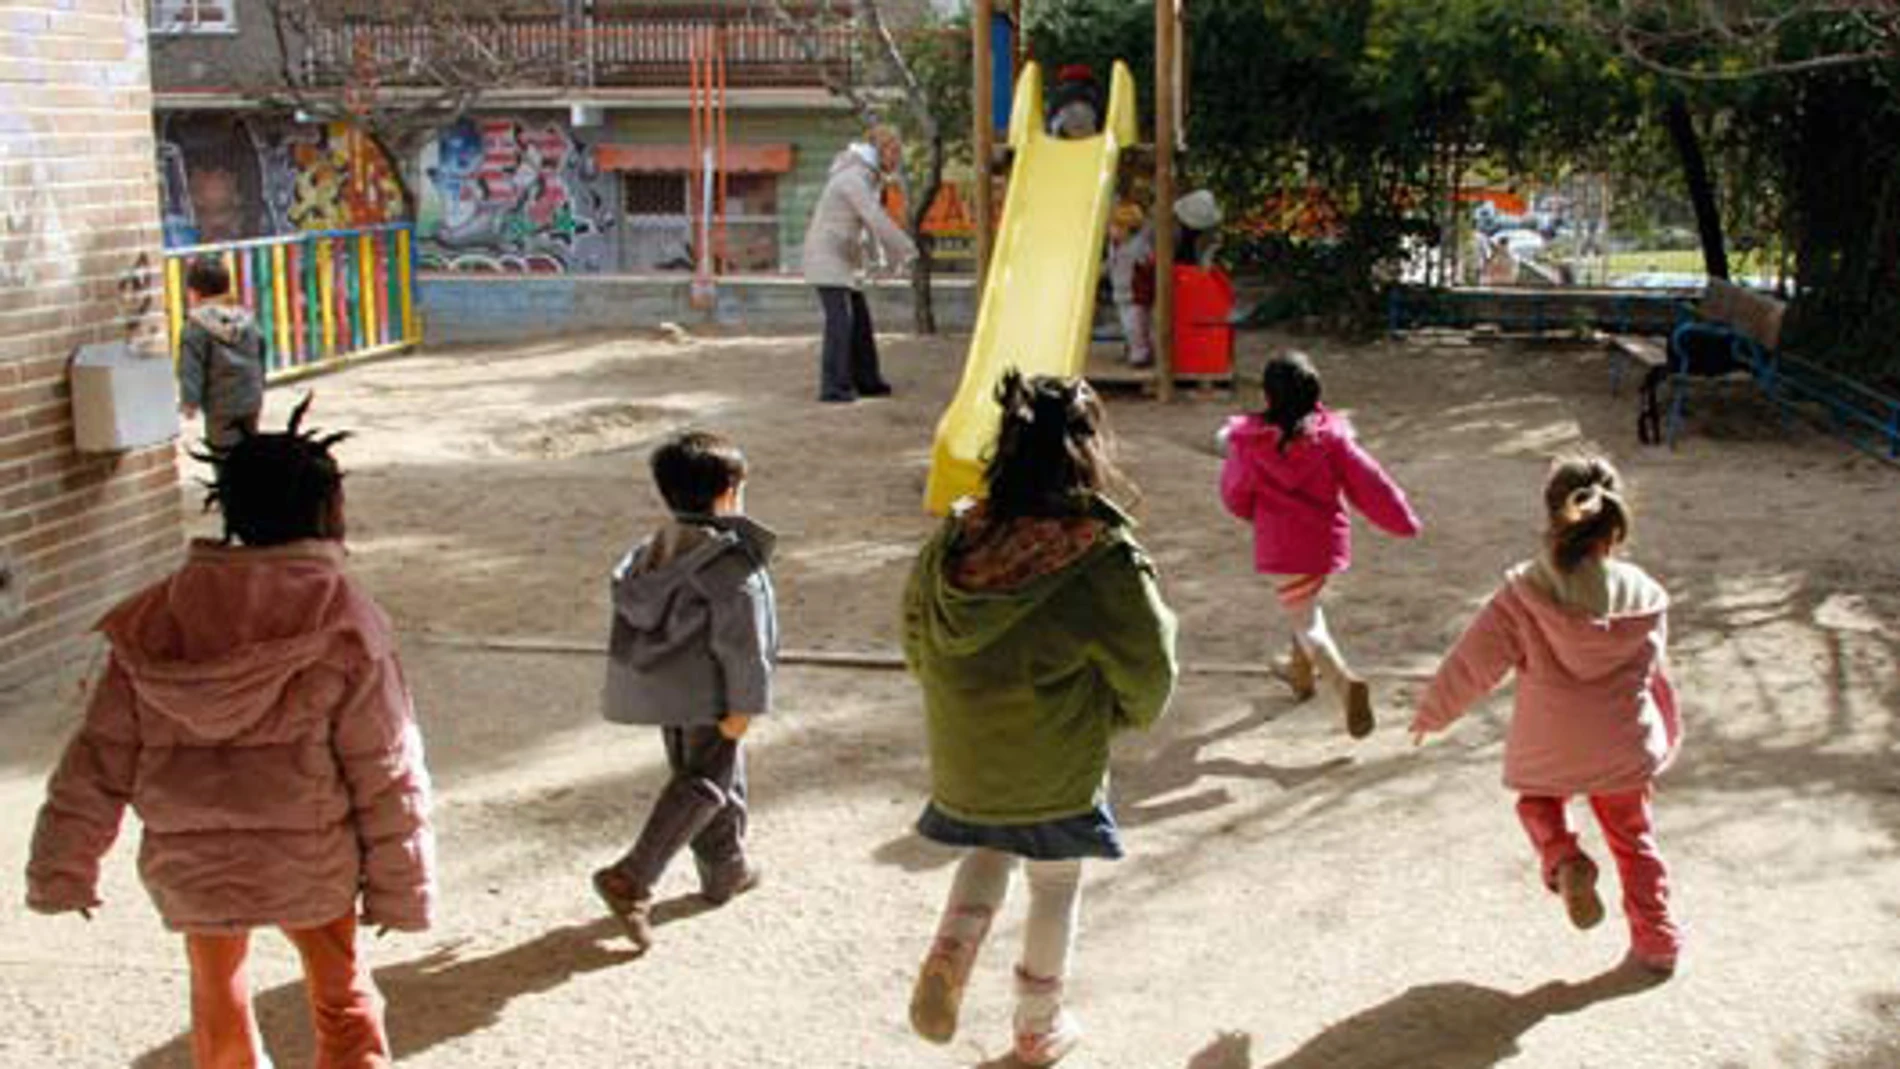 Varios niños salen a jugar a un parque infantil